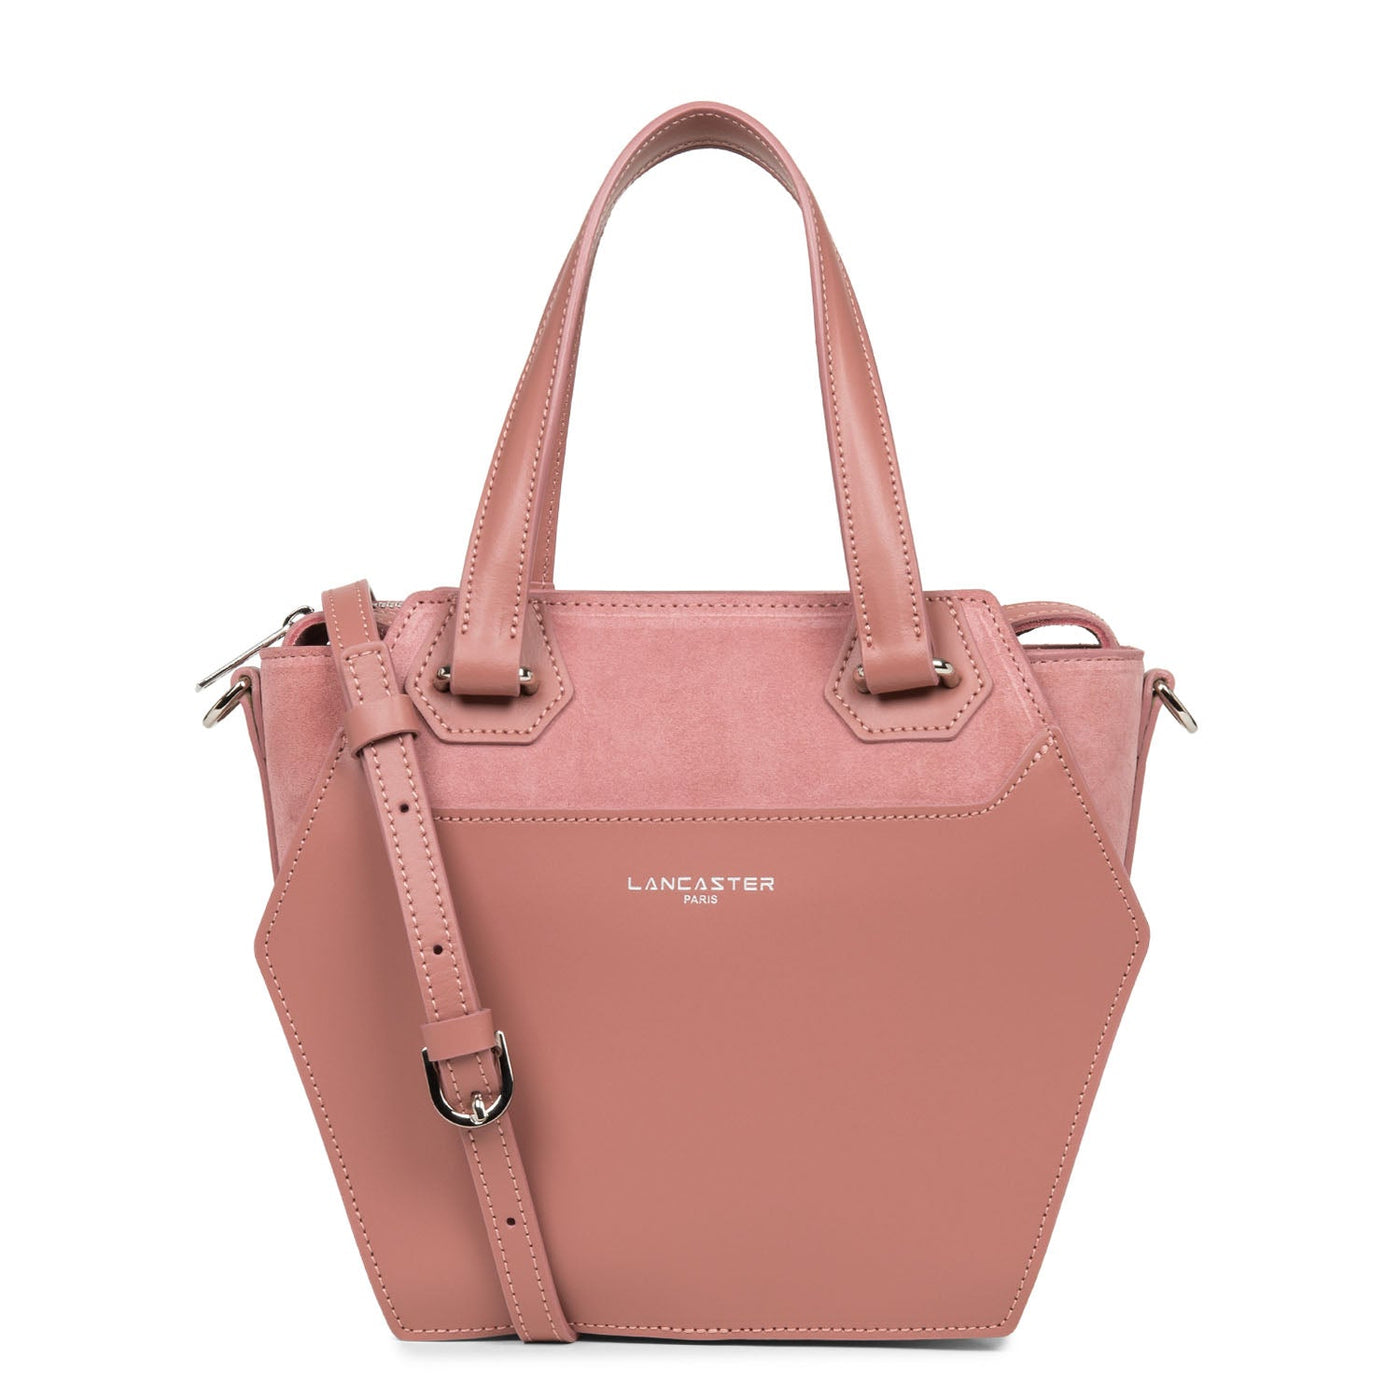 m handbag - smooth ruche #couleur_rose-cendre